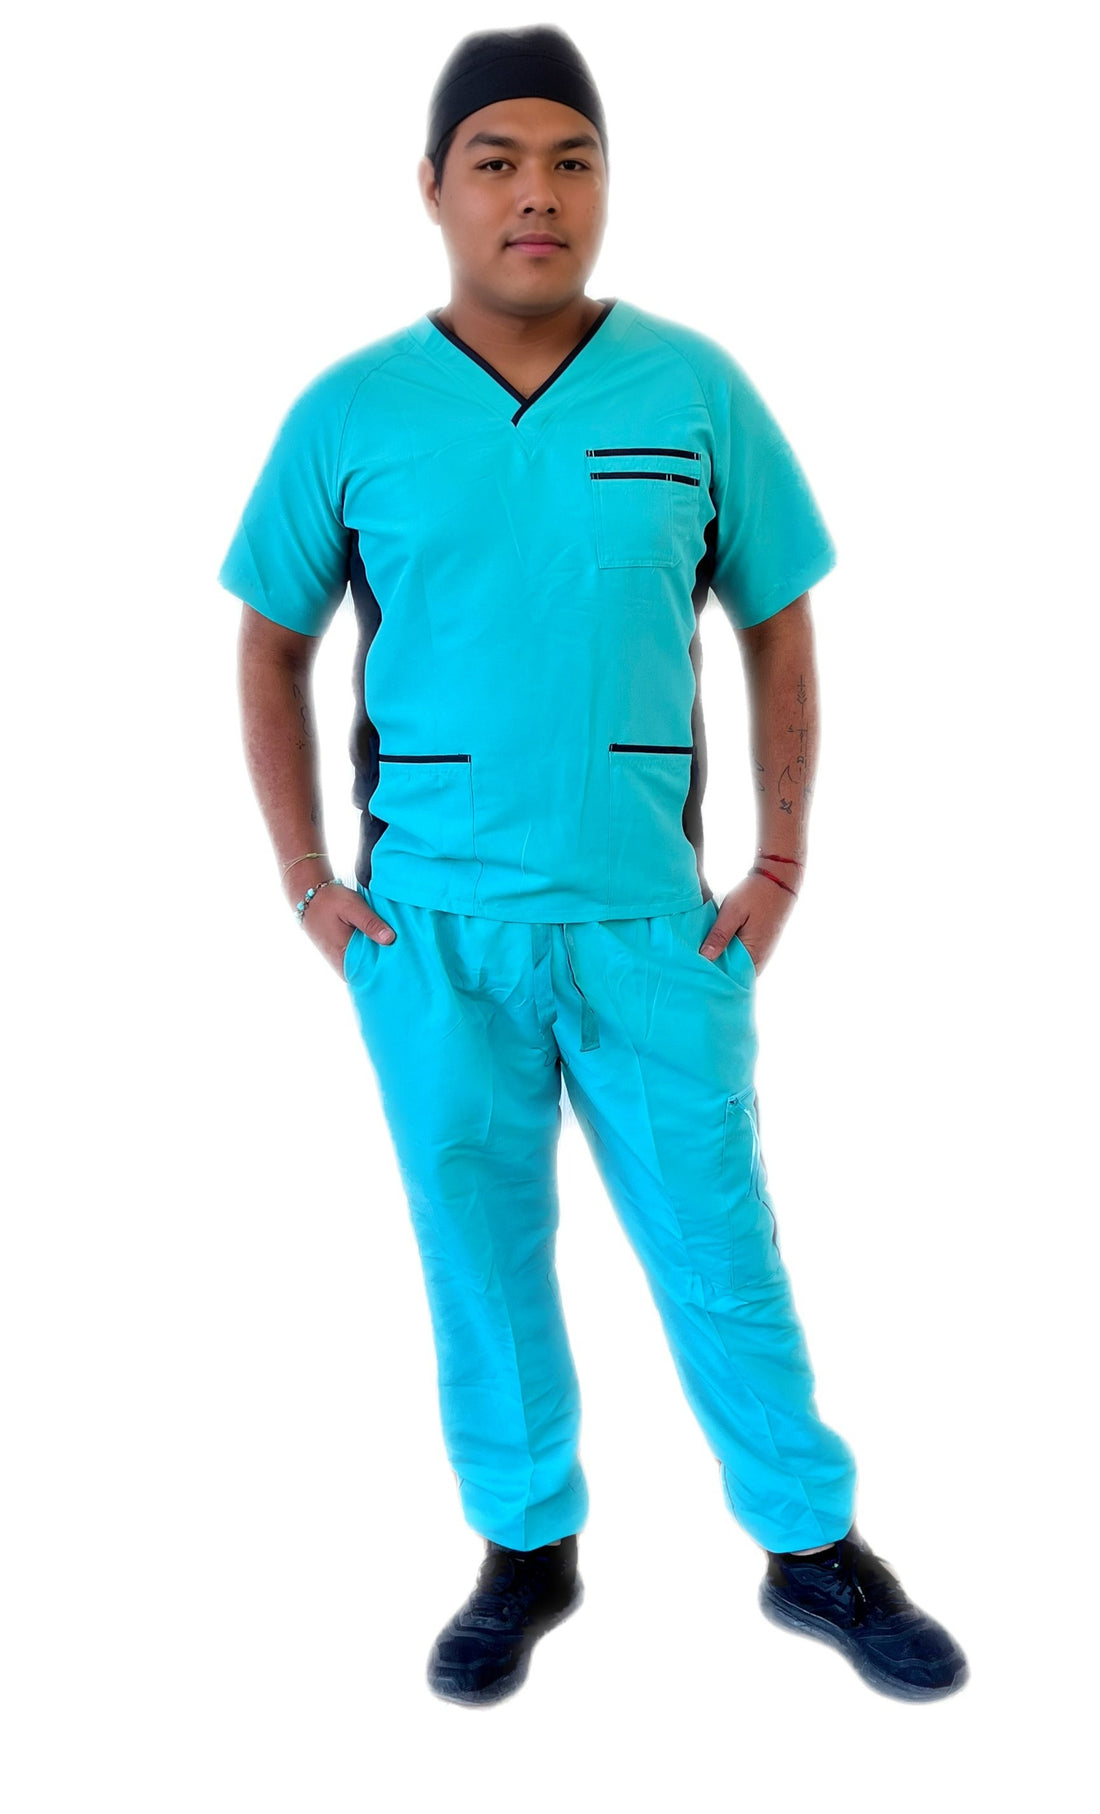 jogger quirurgico uniformes stanford